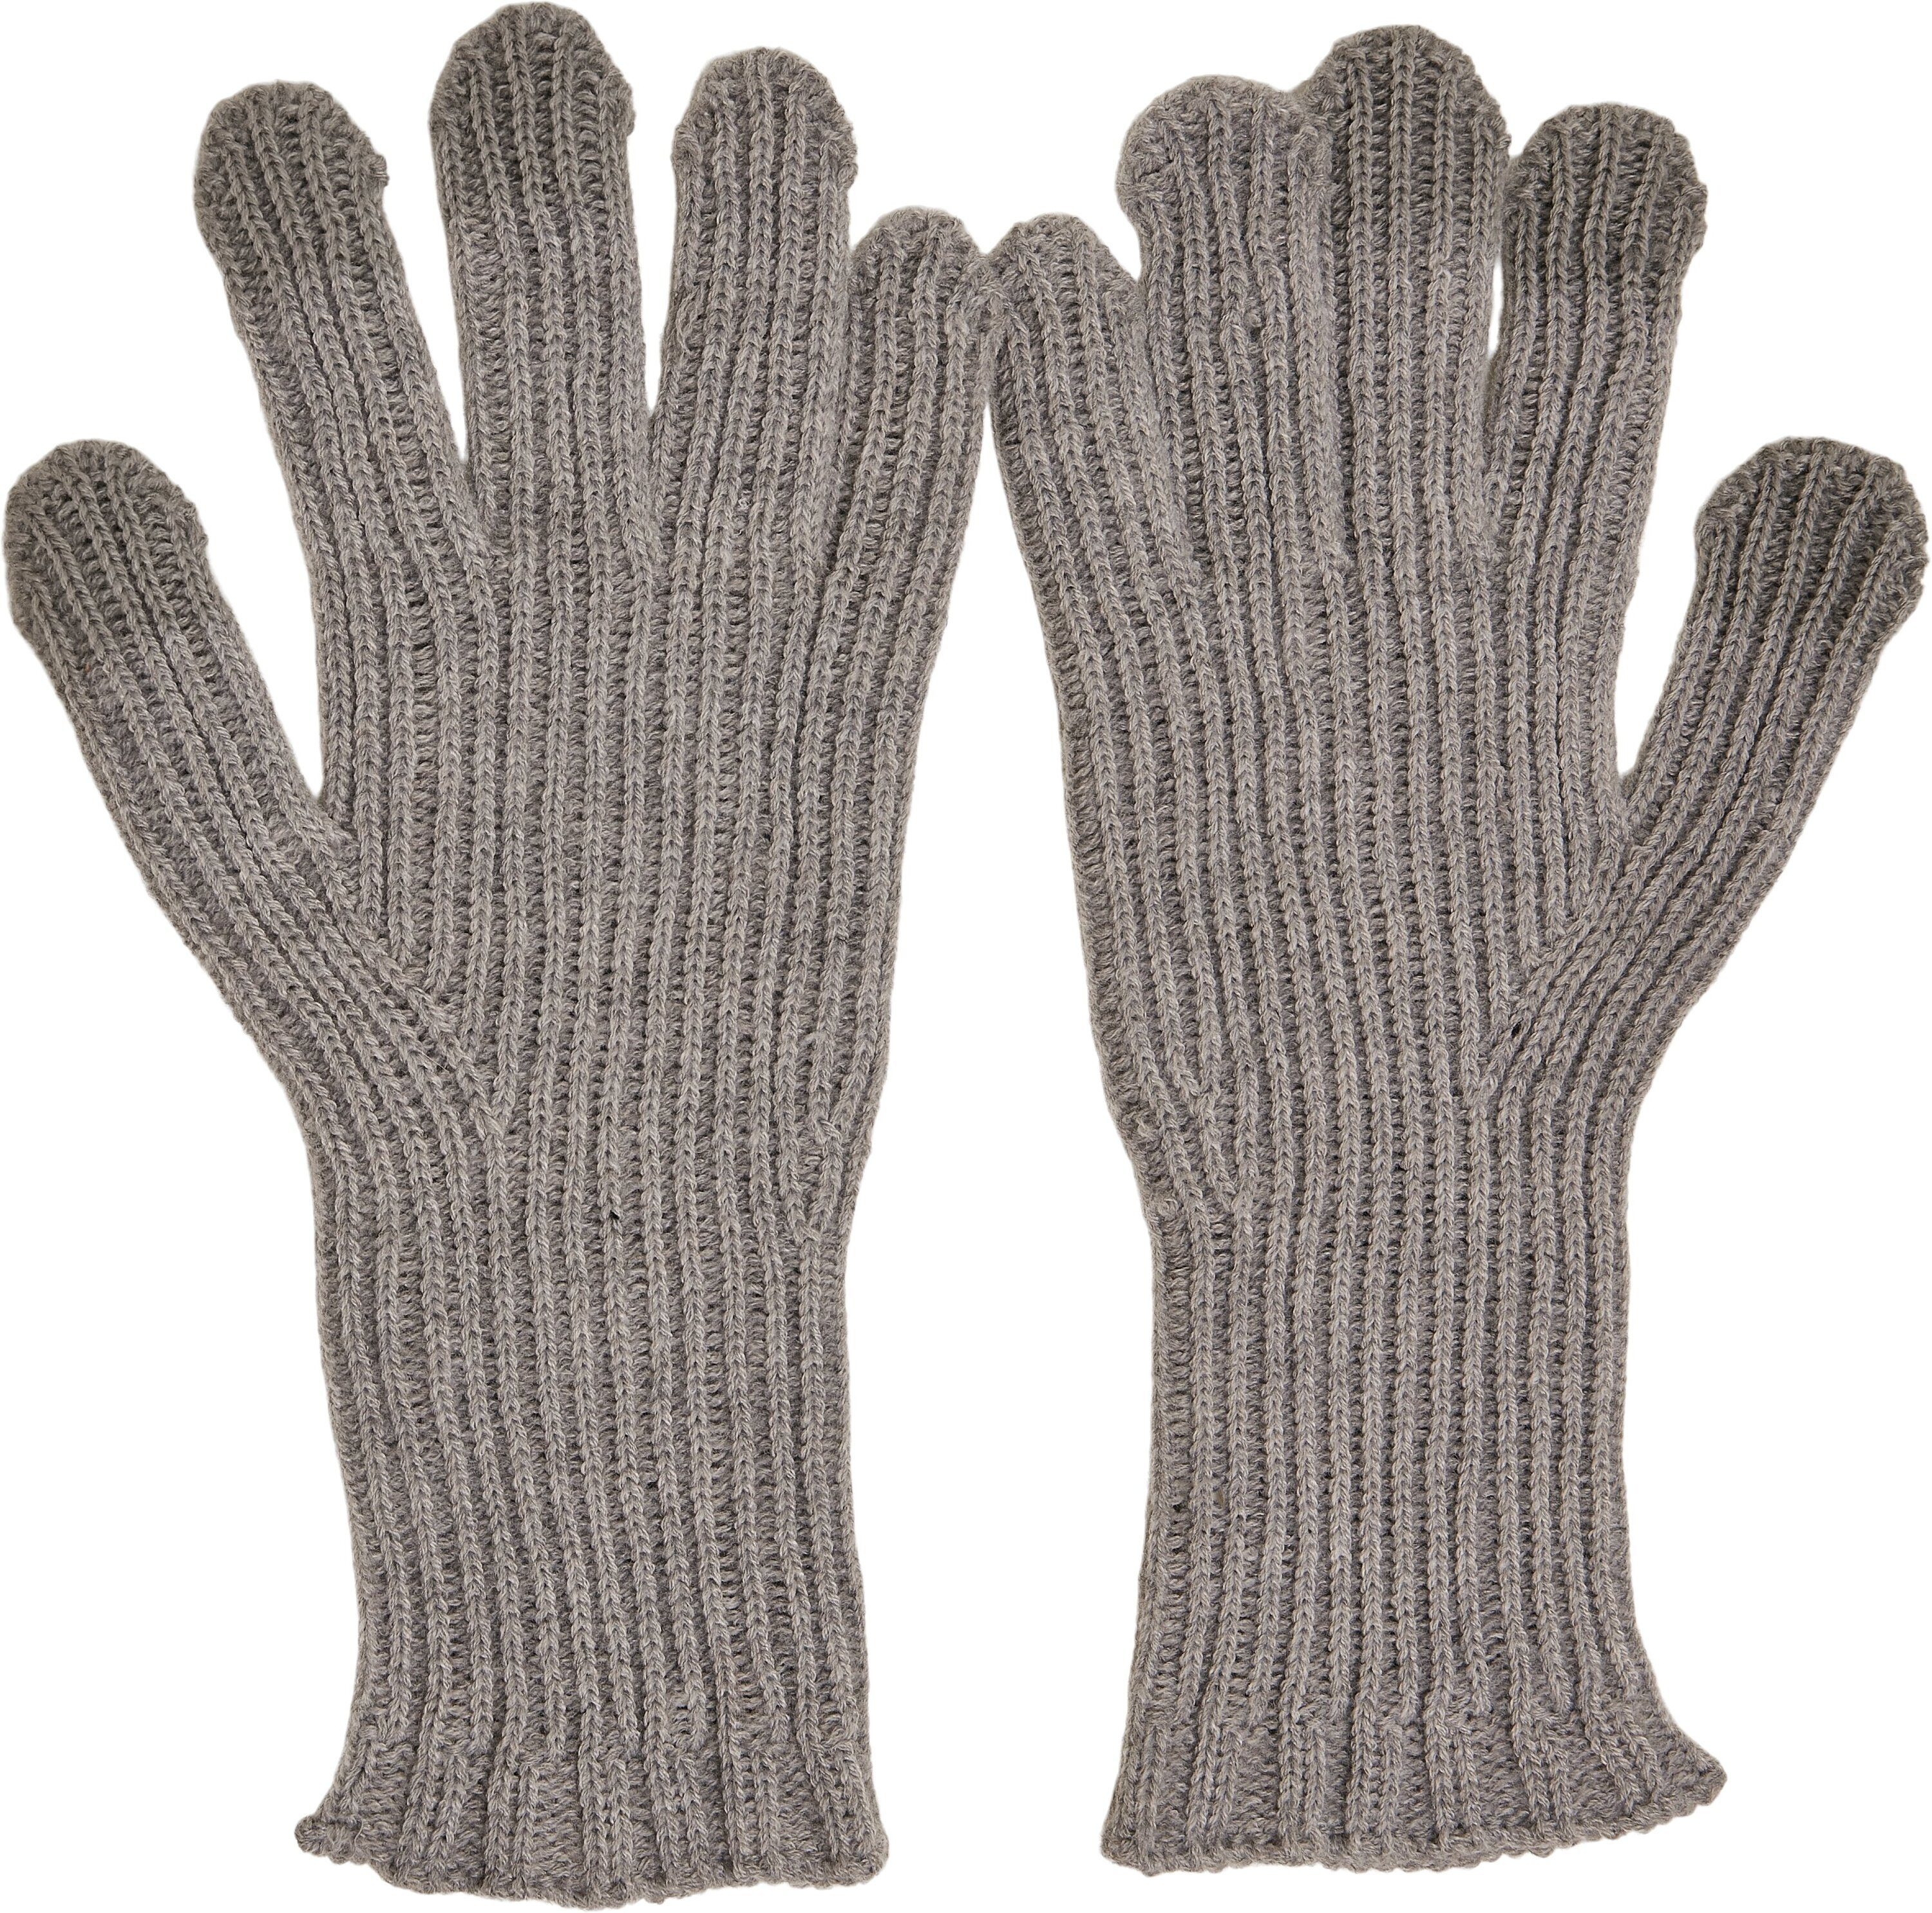 URBAN Smart CLASSICS Knitted Wool Baumwollhandschuhe heathergrey Gloves Unisex Mix